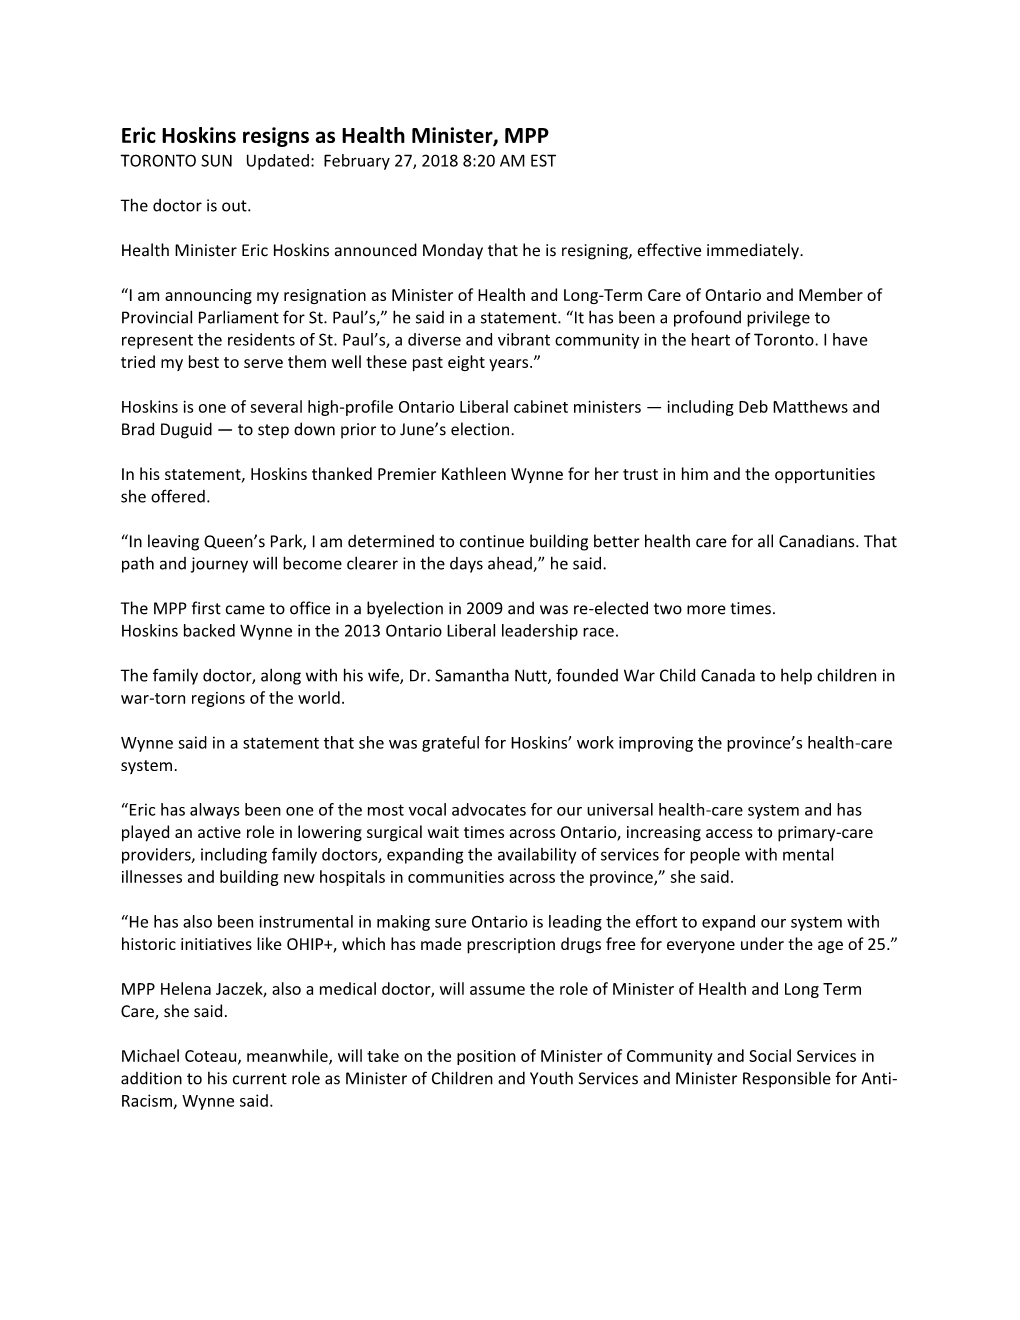 Eric Hoskins Resigns As Health Minister, MPP TORONTO SUN Updated: February 27, 2018 8:20 AM EST